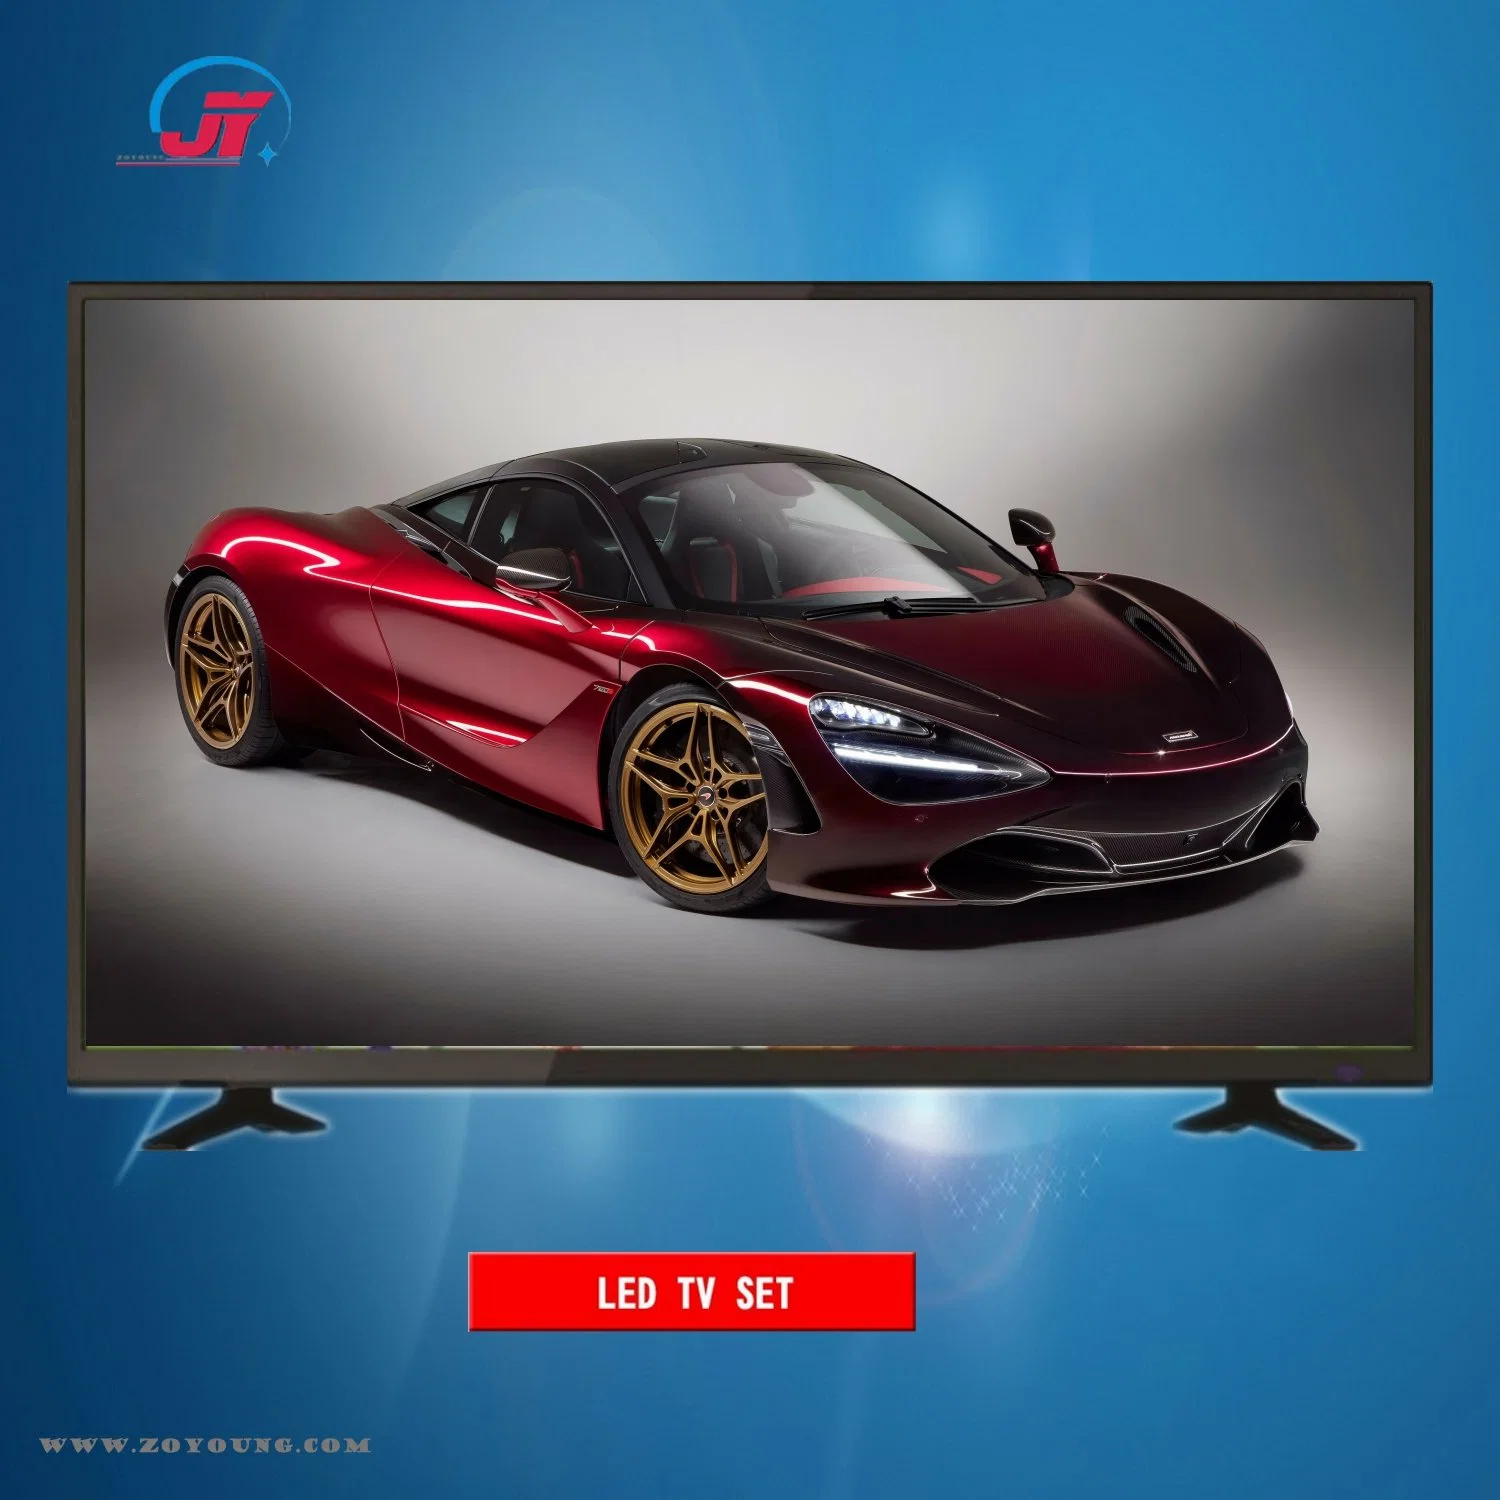 Monitor doméstica OEM 43polegadas Android FHD DVB-T2/S2 LED TV digital de televisão a cores inteligente